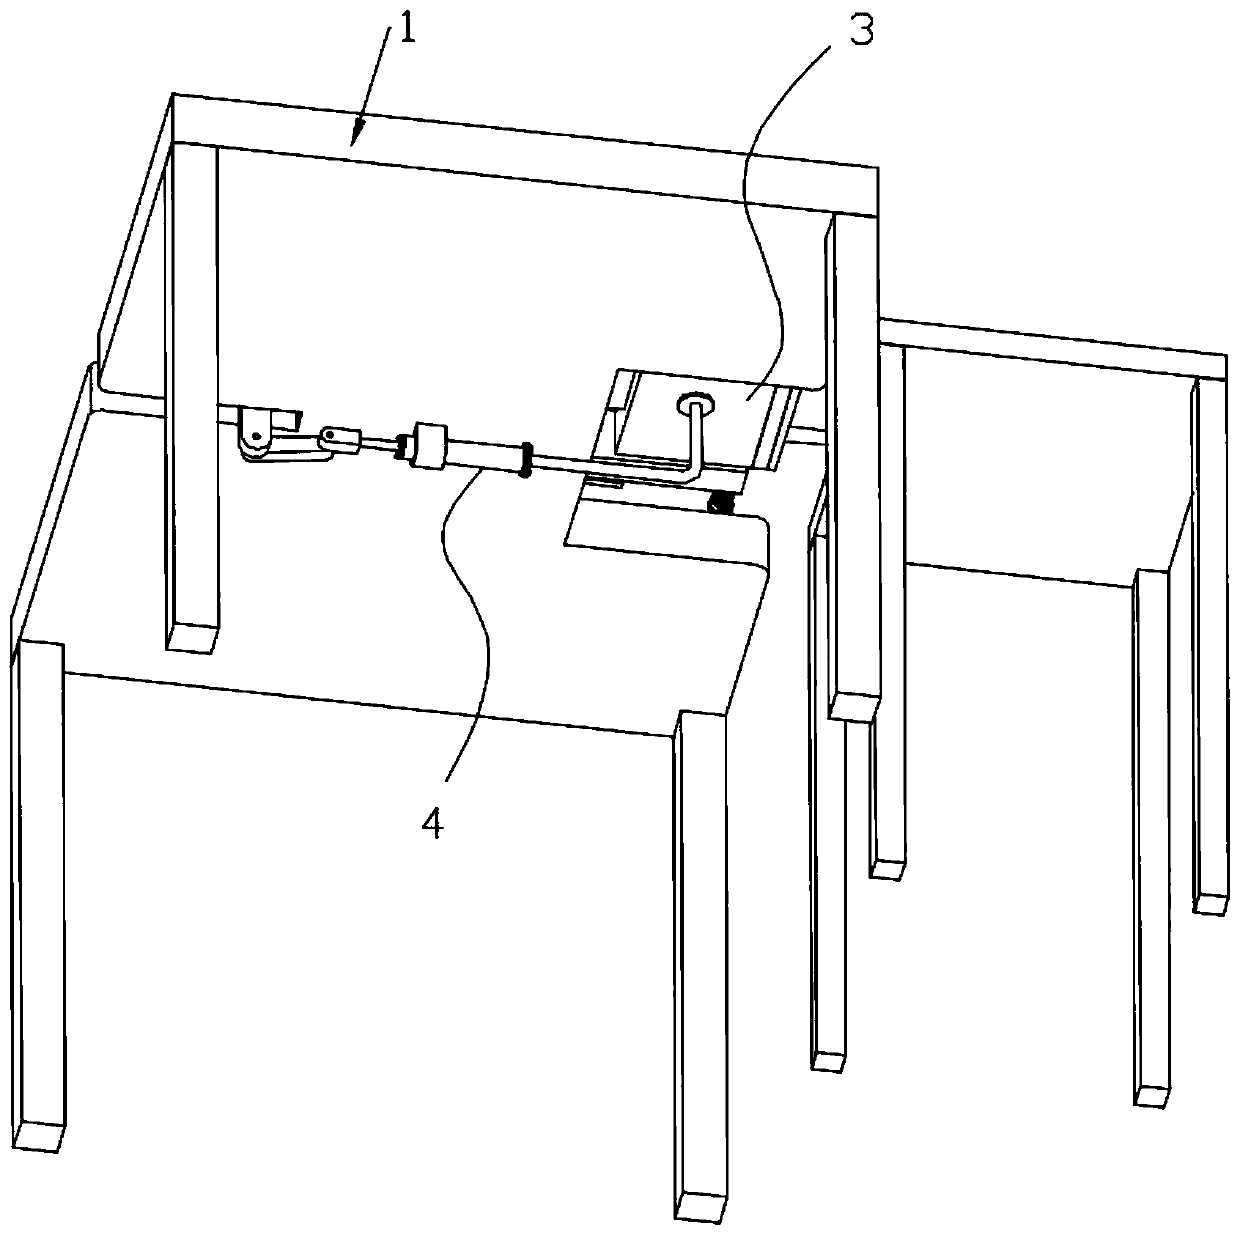 Assembly device of radiator bracket of refrigeration equipment